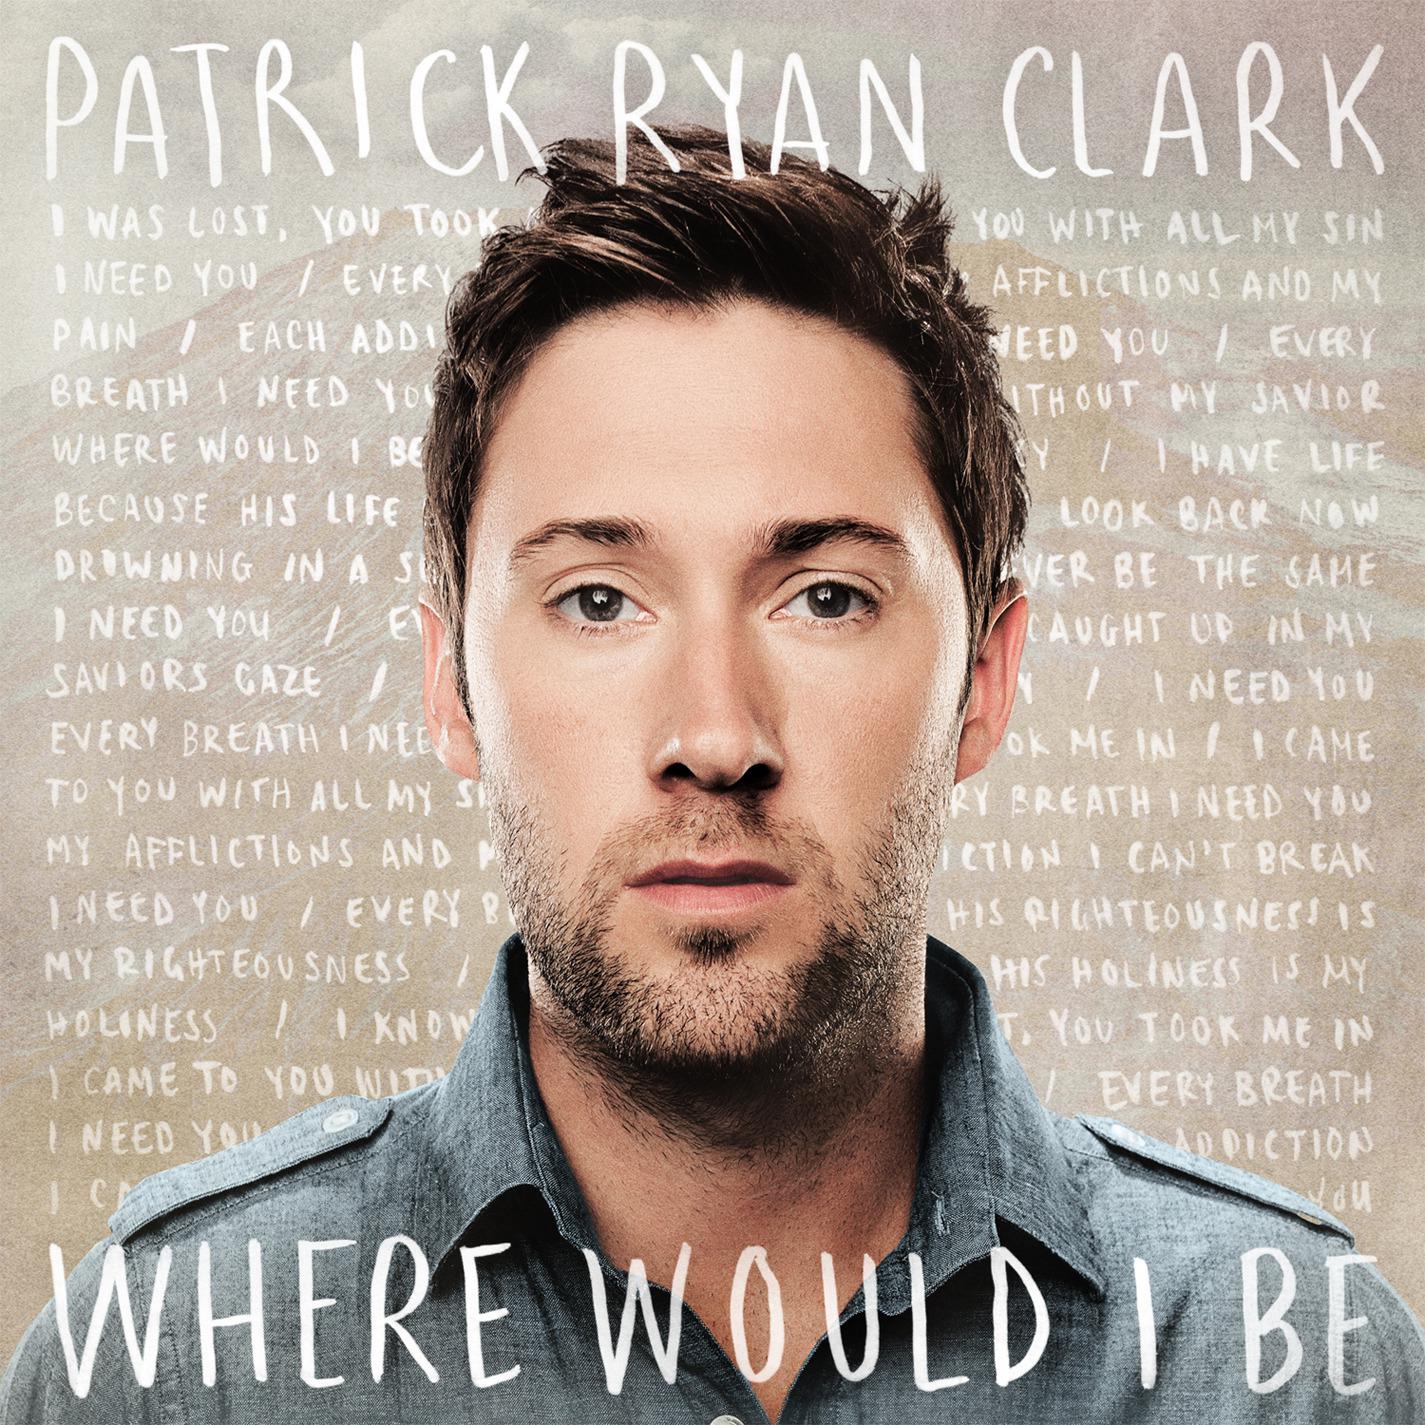 Patrick Ryan Clark - When All the World Falls